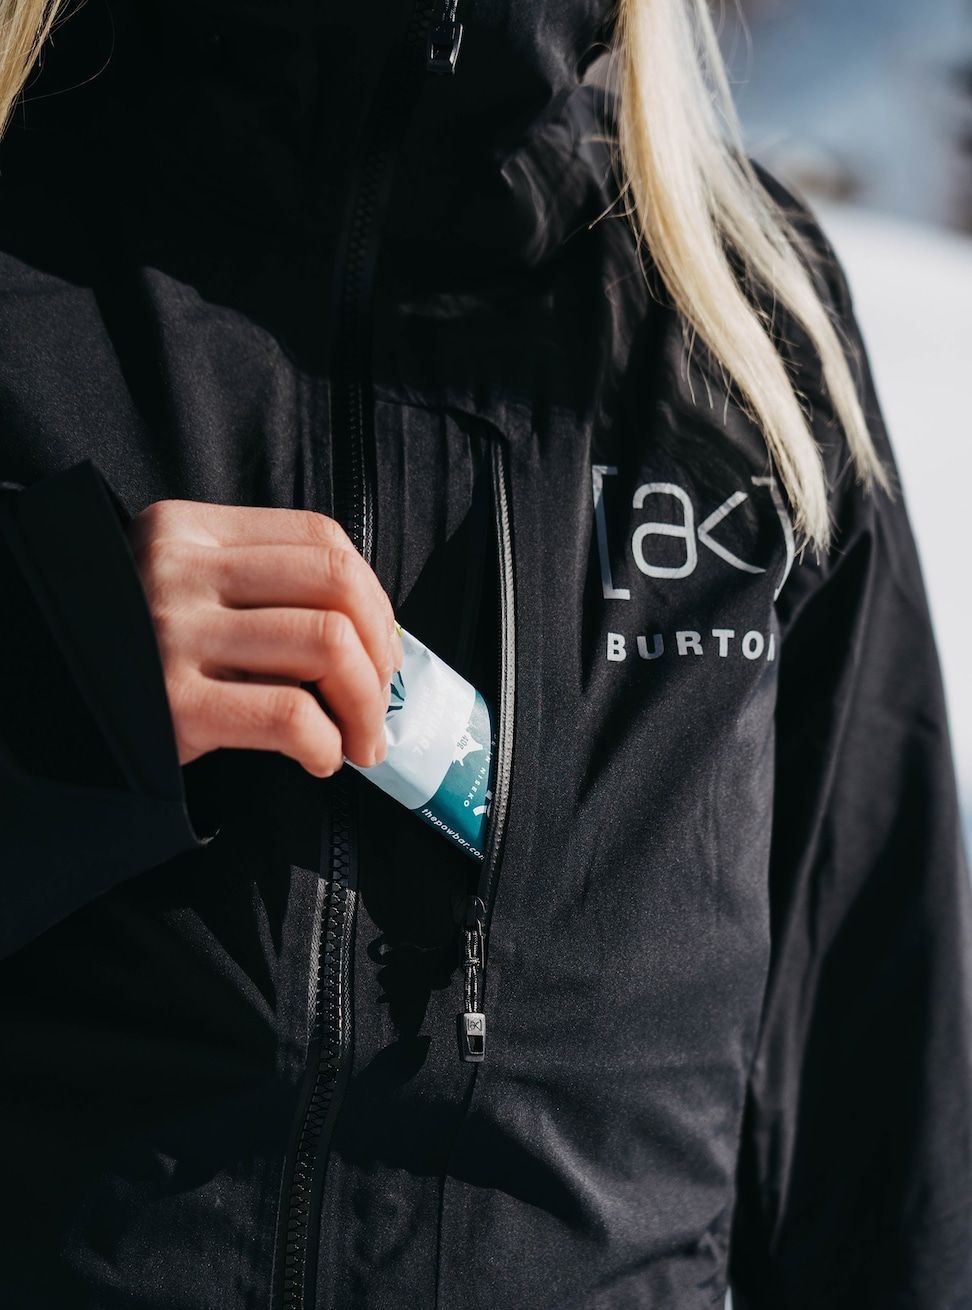 Women's Burton [ak] Upshift GORE-TEX 2L Jacket True Black Snow Jackets